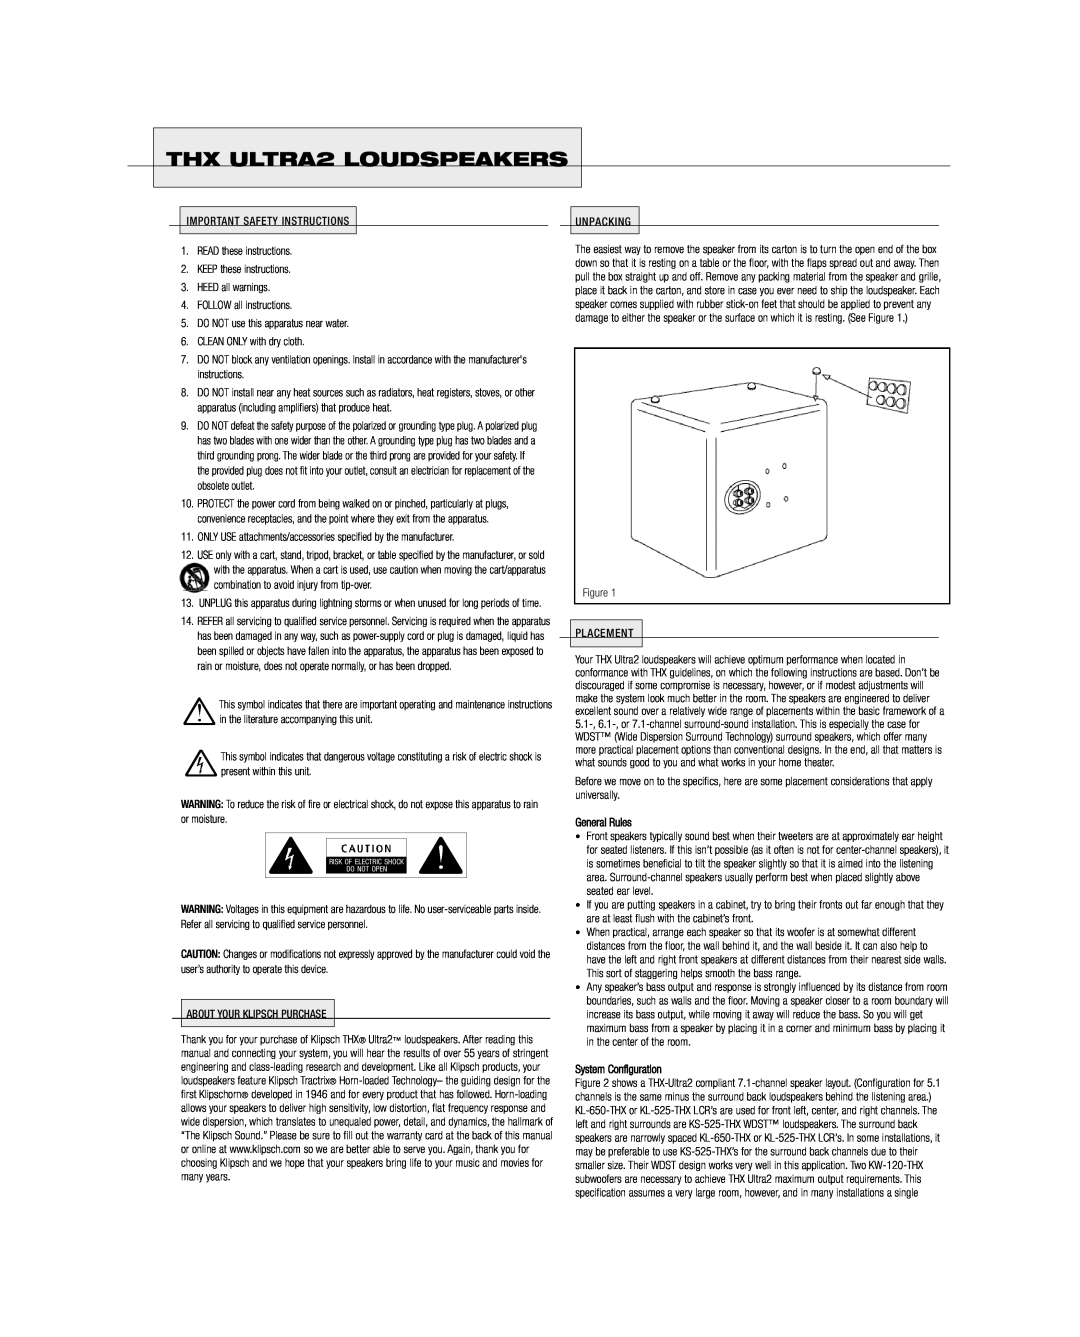 Klipsch KL-650-THX owner manual THX ULTRA2 LOUDSPEAKERS, General Rules, System Configuration 